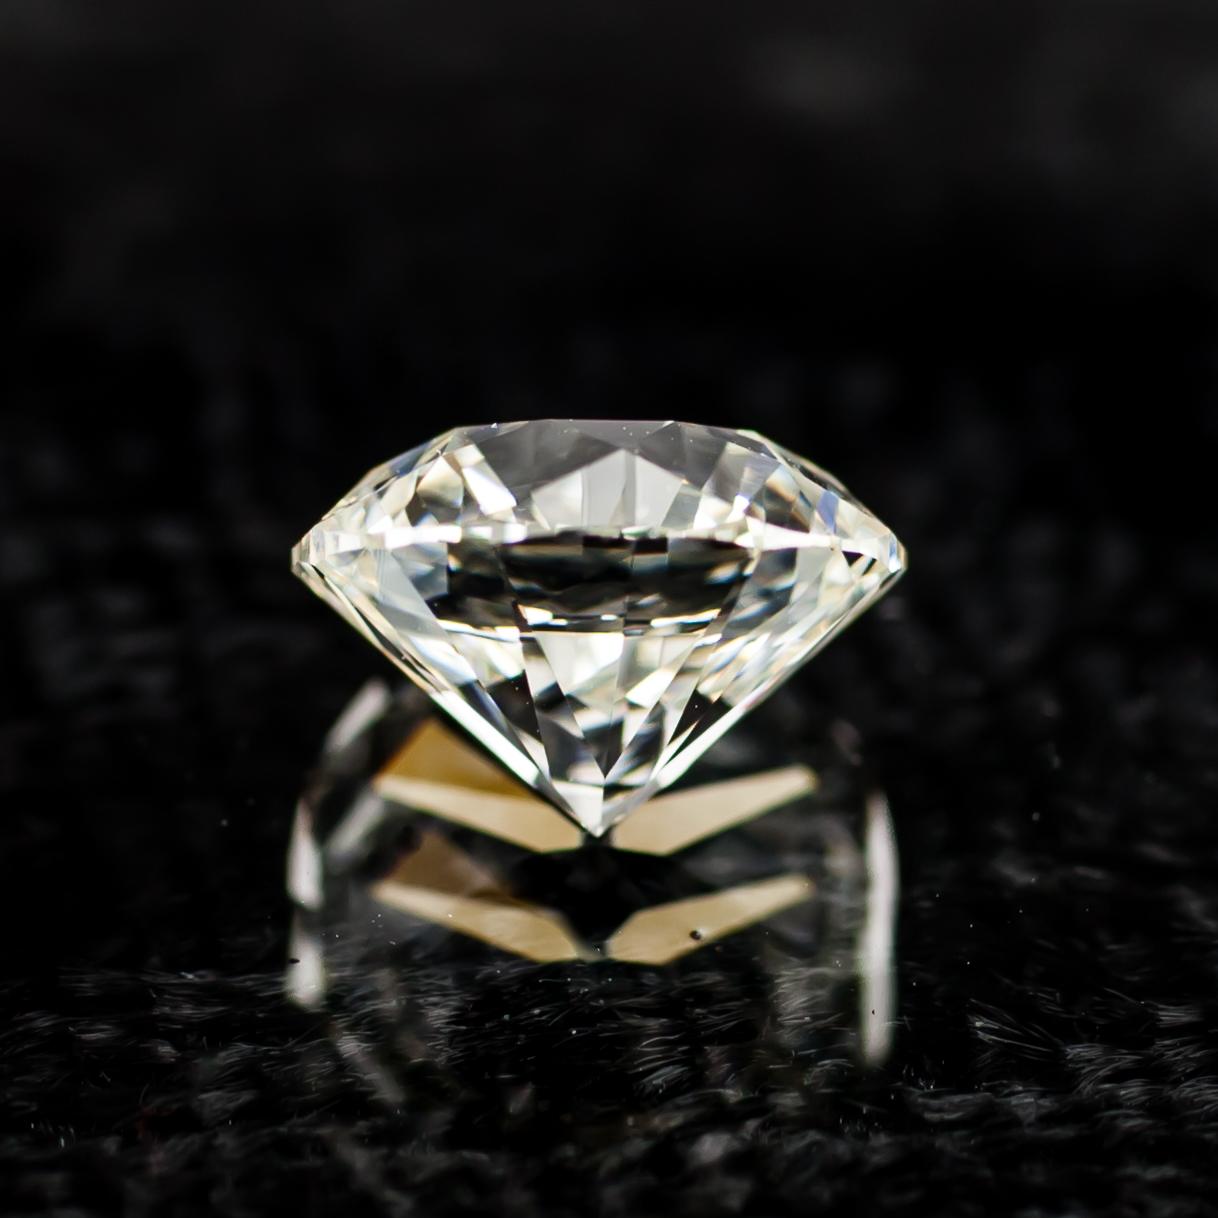 Moderne Diamant taille ronde brillant de 2,01 carats non serti K / VS1 certifié GIA en vente